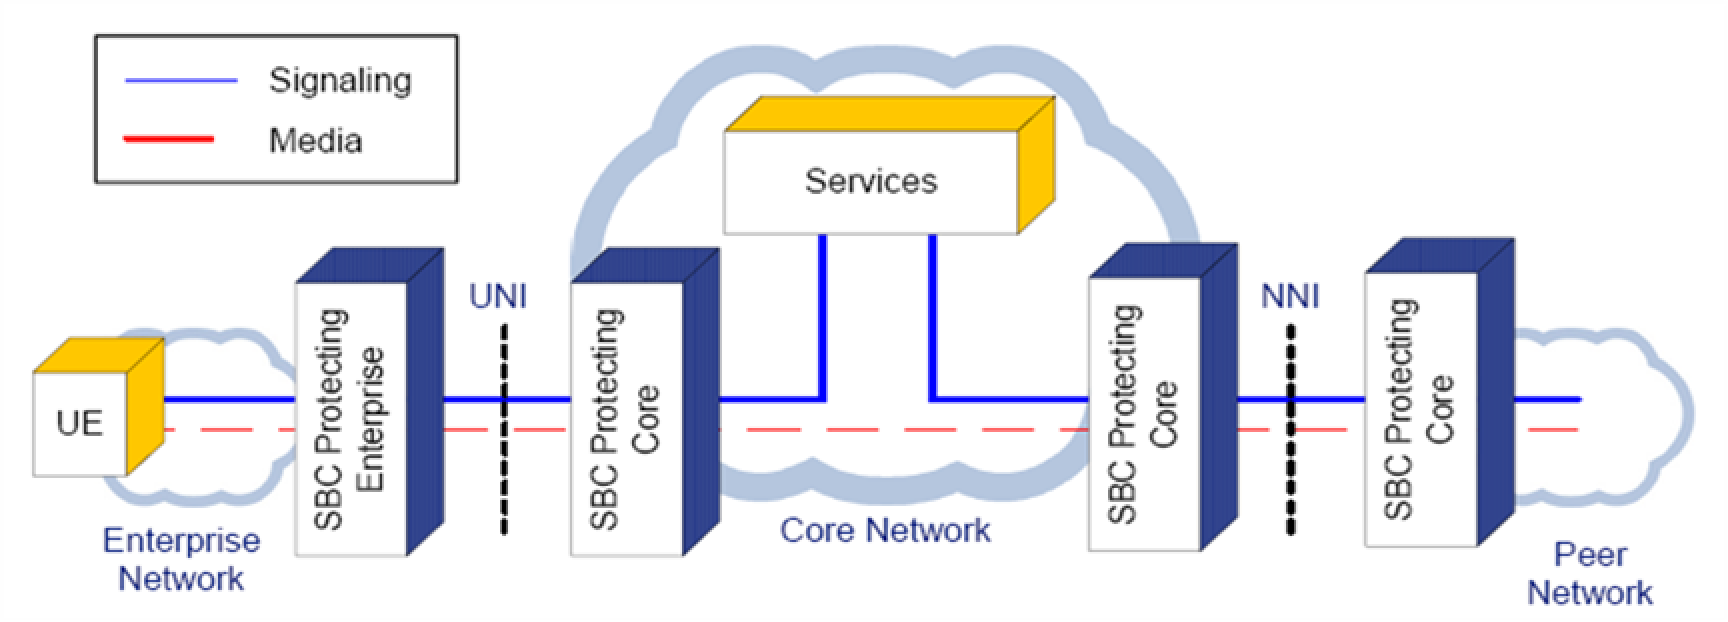 Next Generation Network Services 3.1.